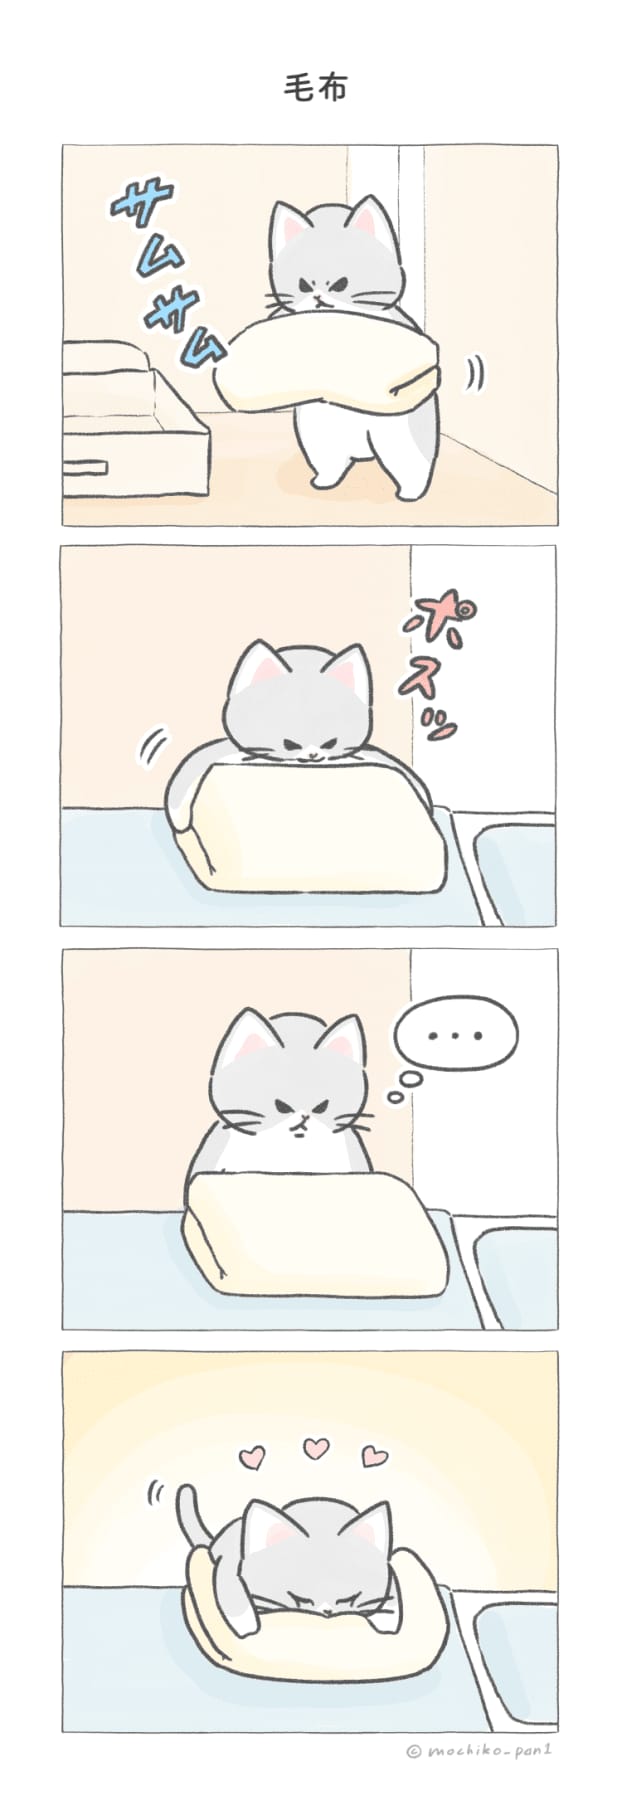 [Four-panel manga] vol.97 “Blanket” | Good morning!Oshiba and his happy friends